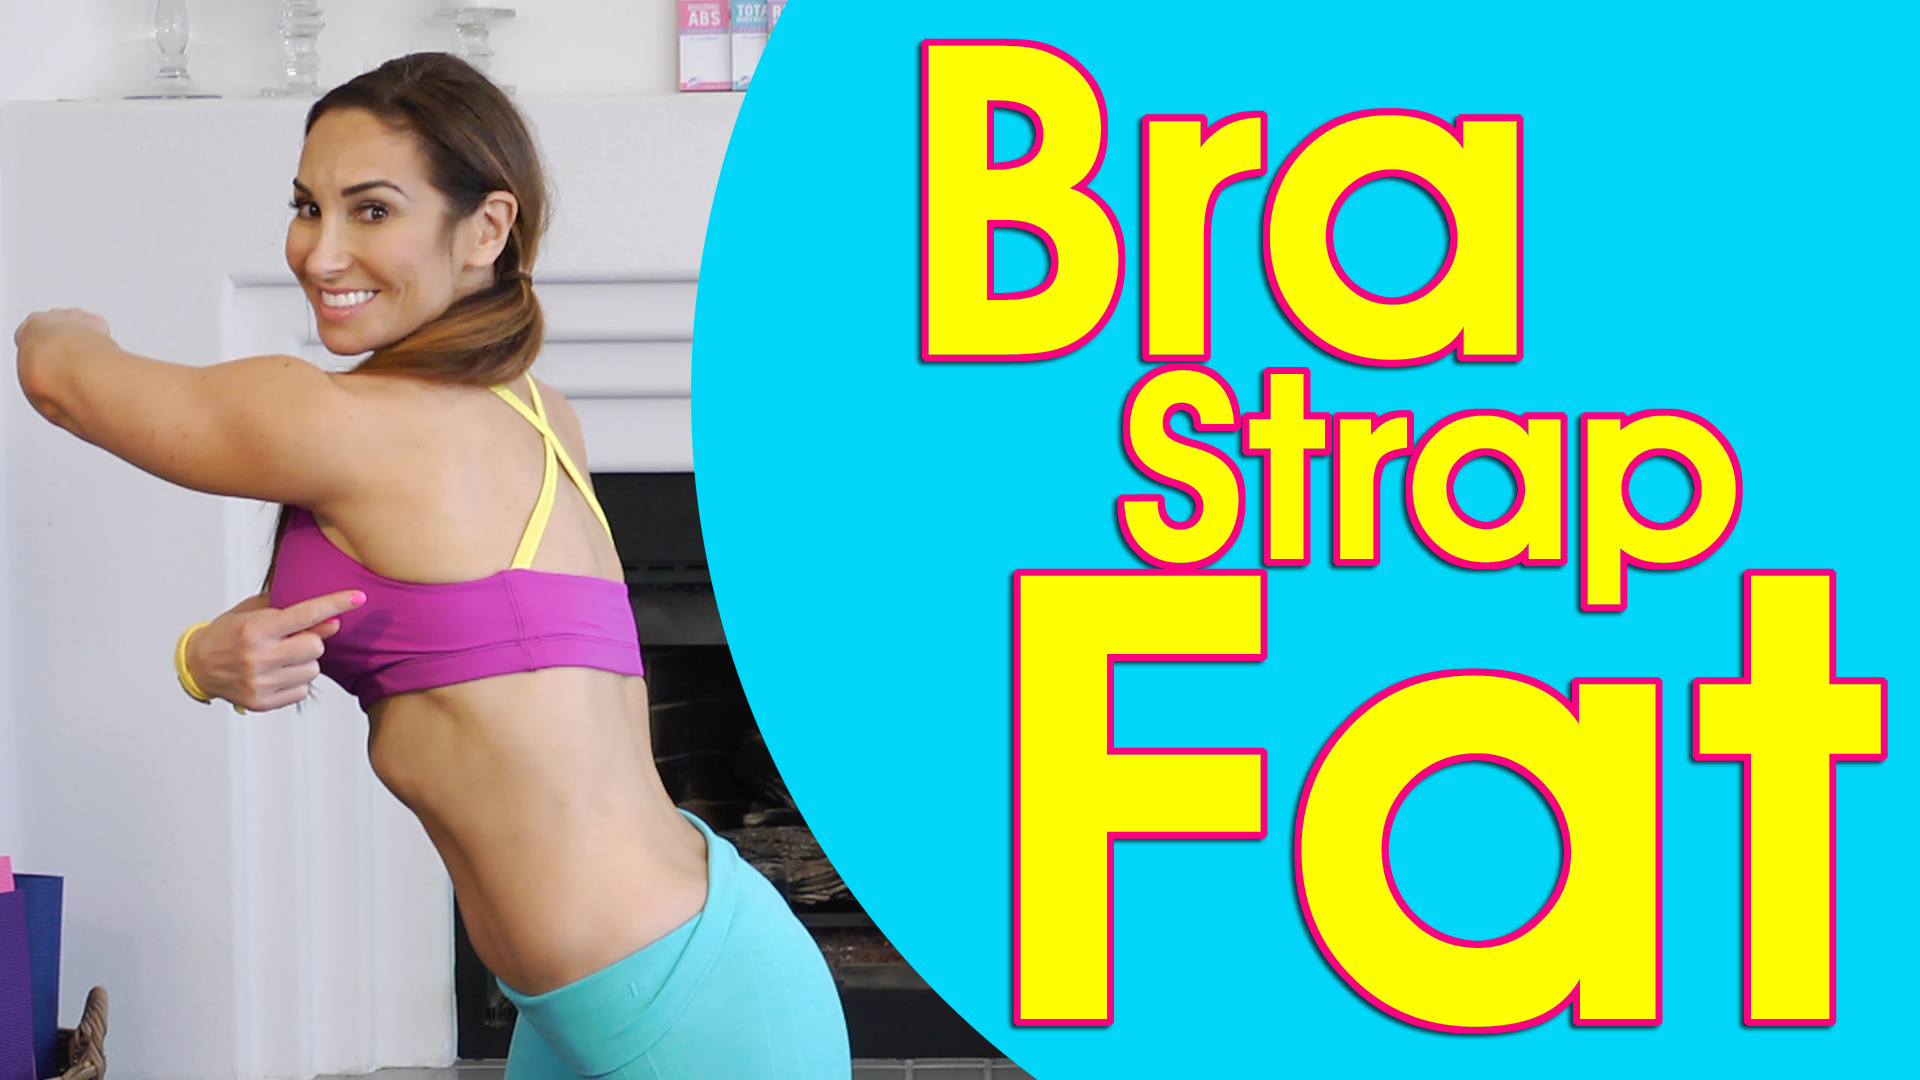 Back Fat Attack Exercises - Video - Natalie Jill Fitness